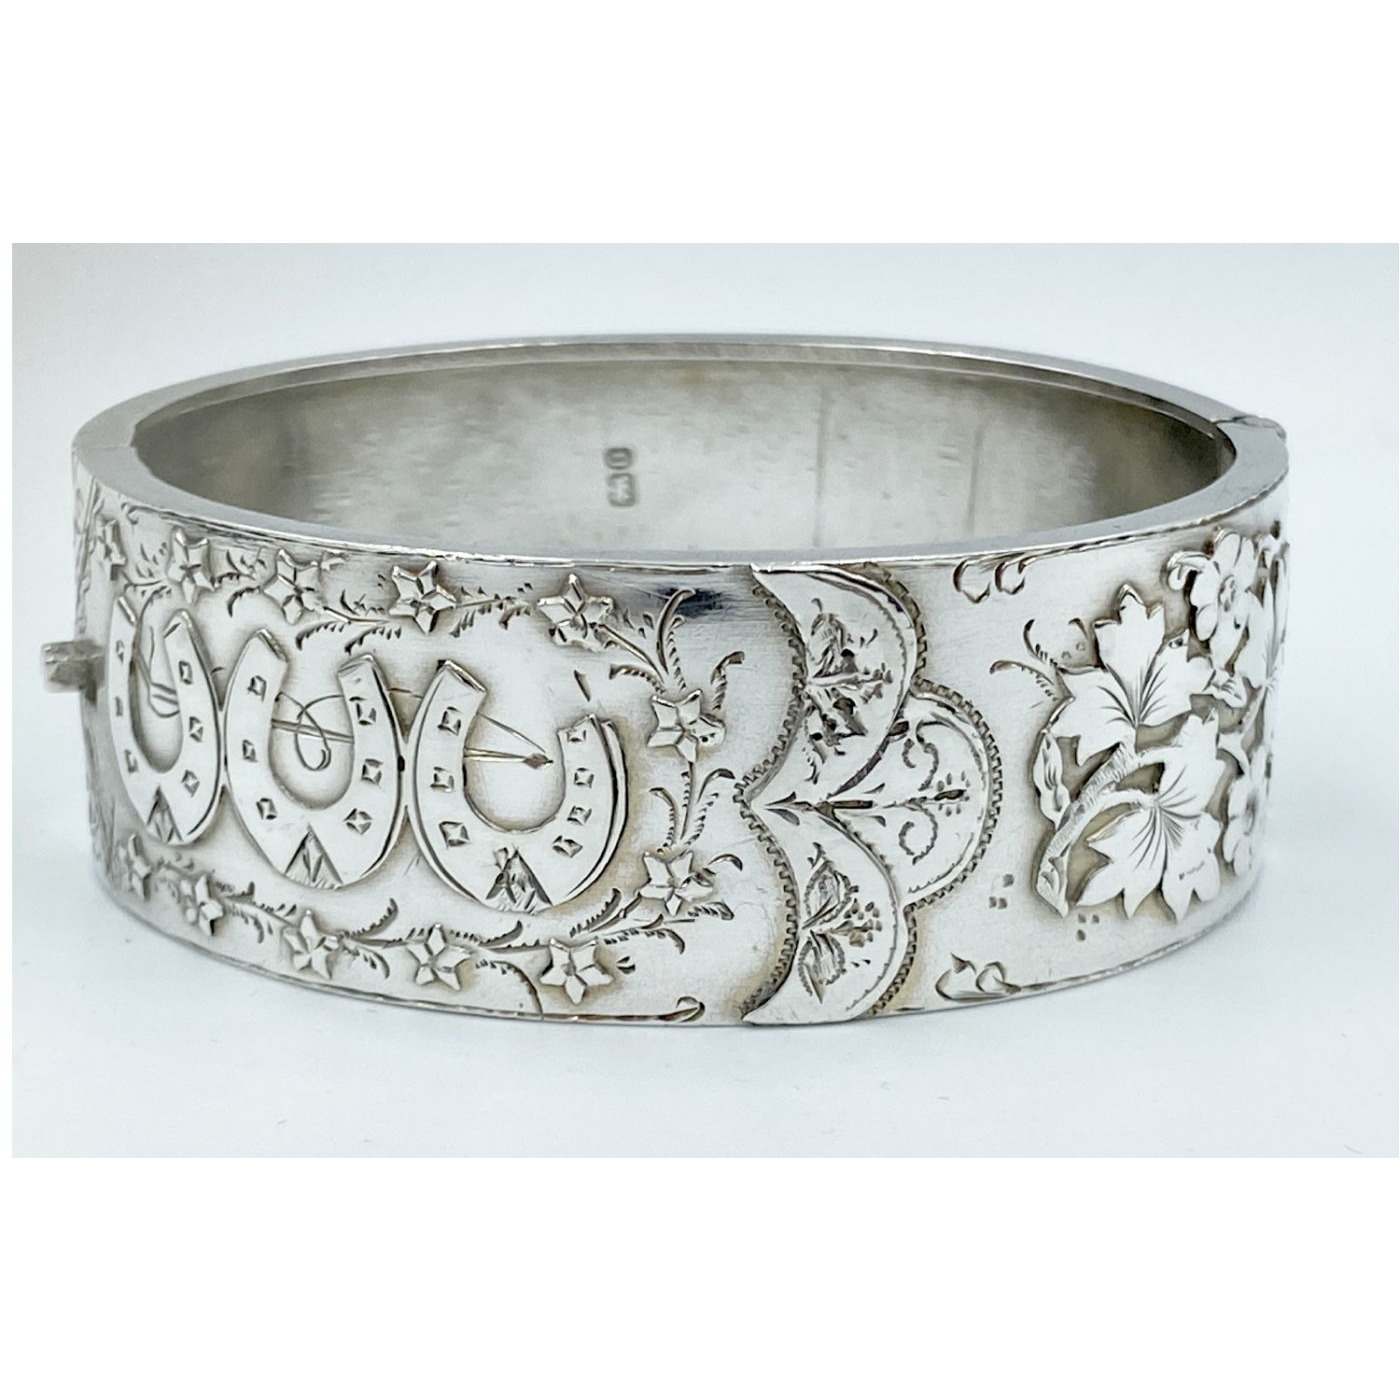 Extraordinary Horseshoe Floral English Silver Bangle